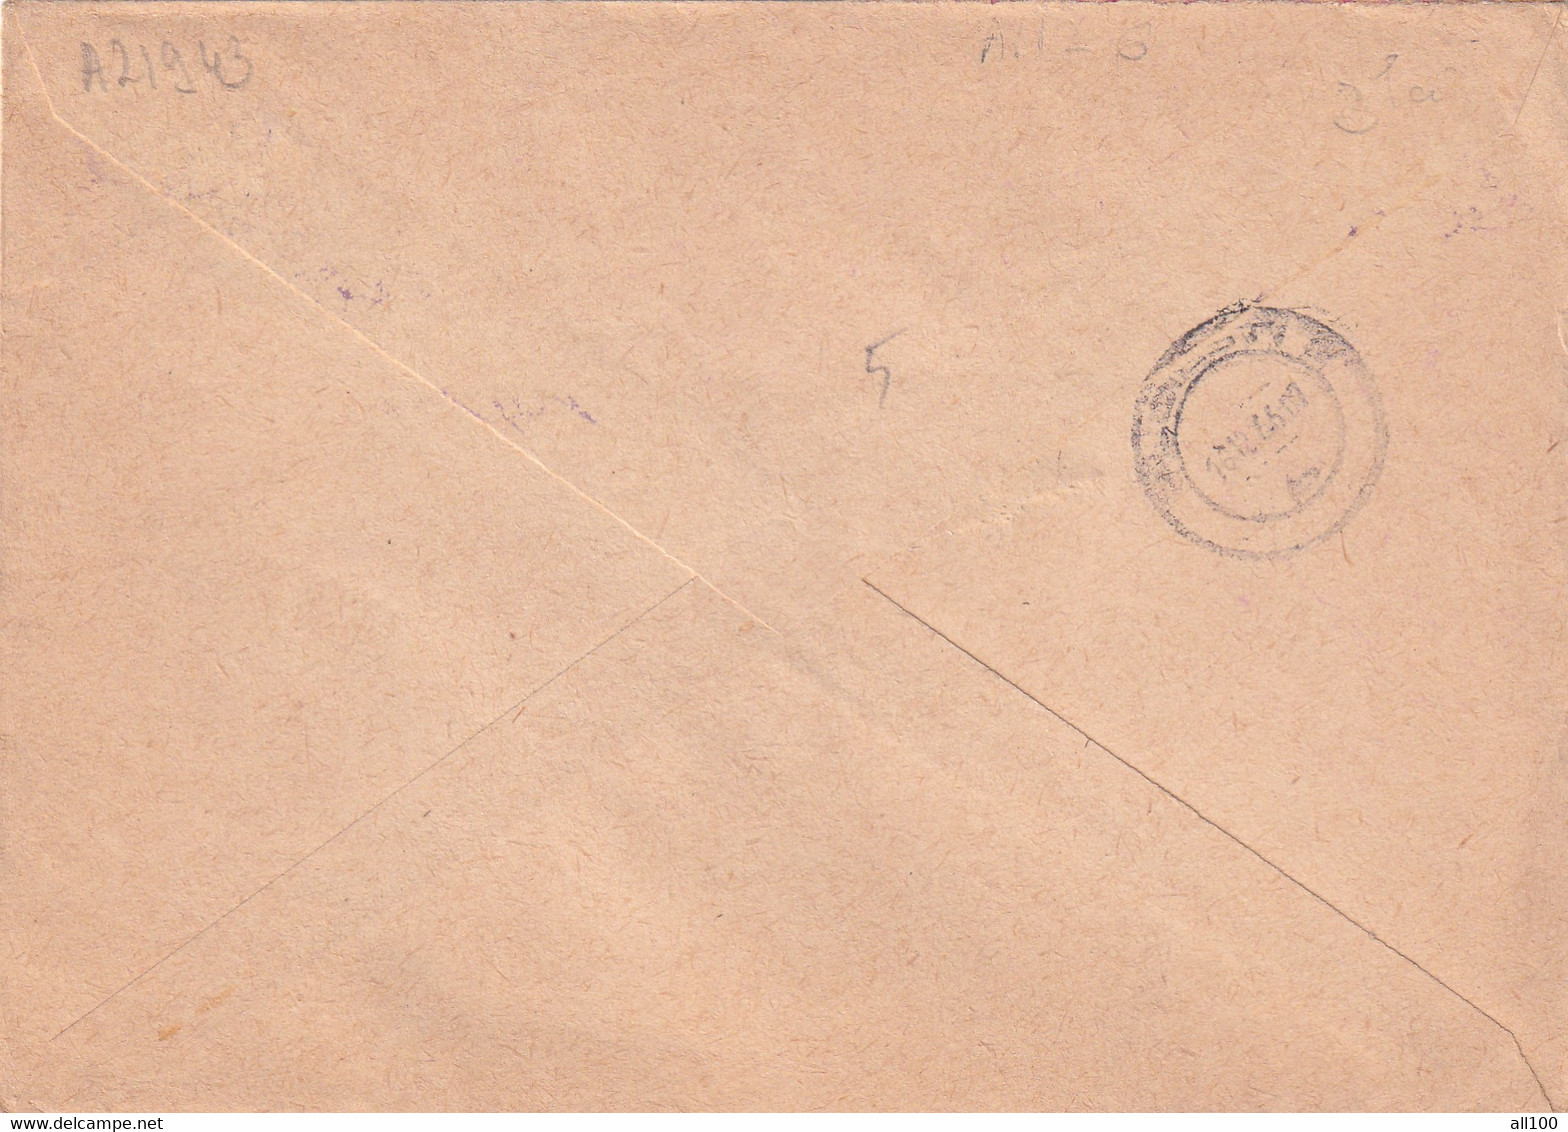 A21943 - Stamp Eduard Vilde Estonian Writer 1965 USSR Mail Soviet Union Cover Envelope Used 1966 Sent To Romania - Brieven En Documenten